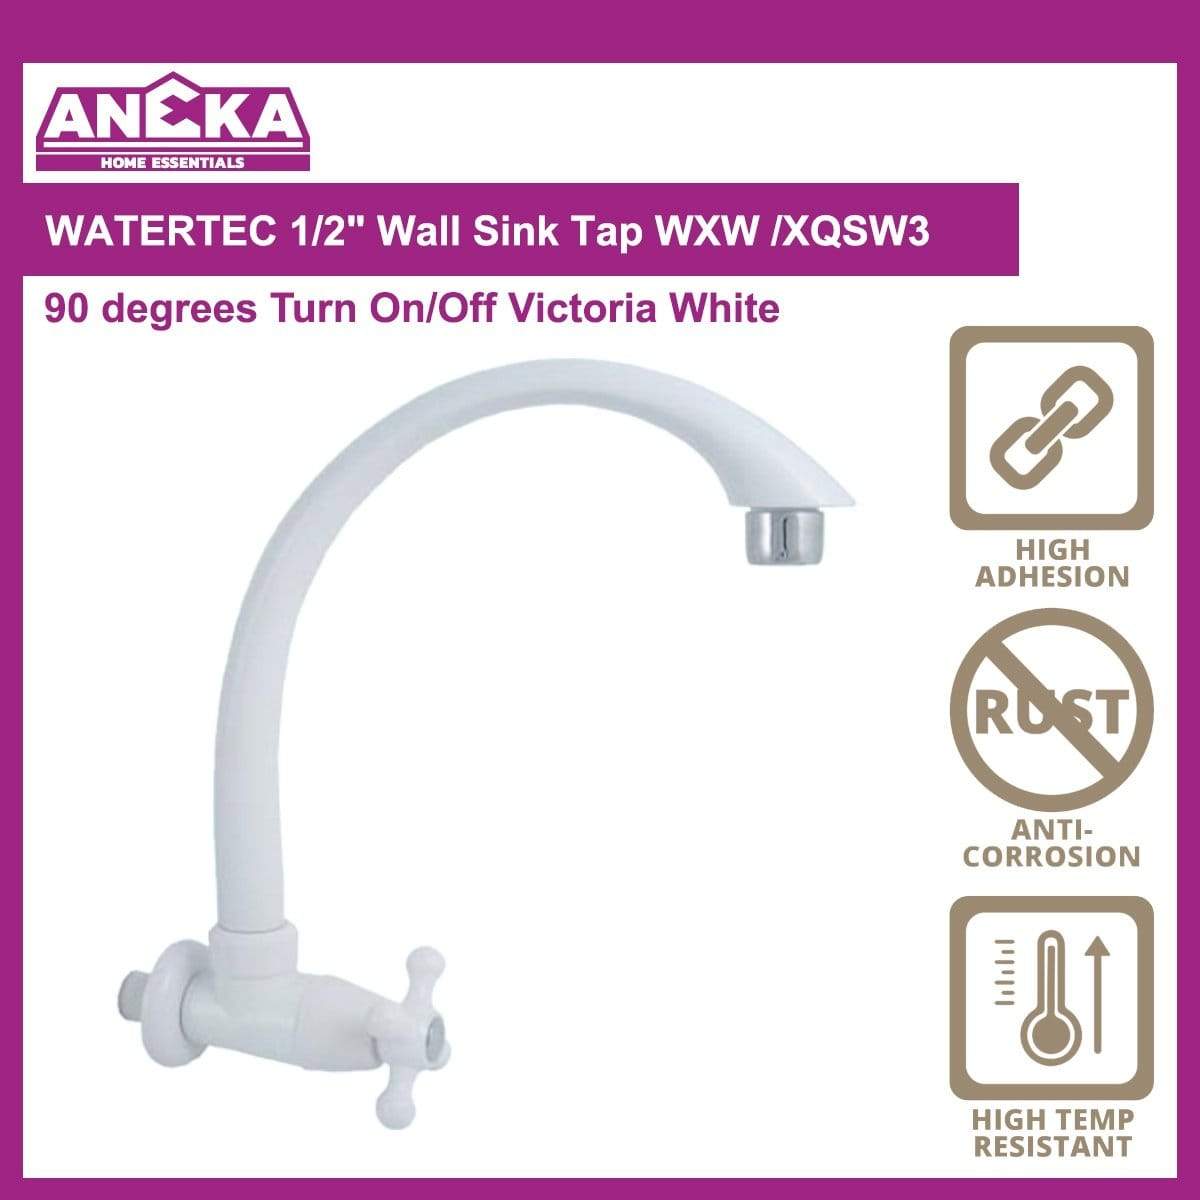 WATERTEC 1/2" Wall Sink Tap WXW /XQSW3